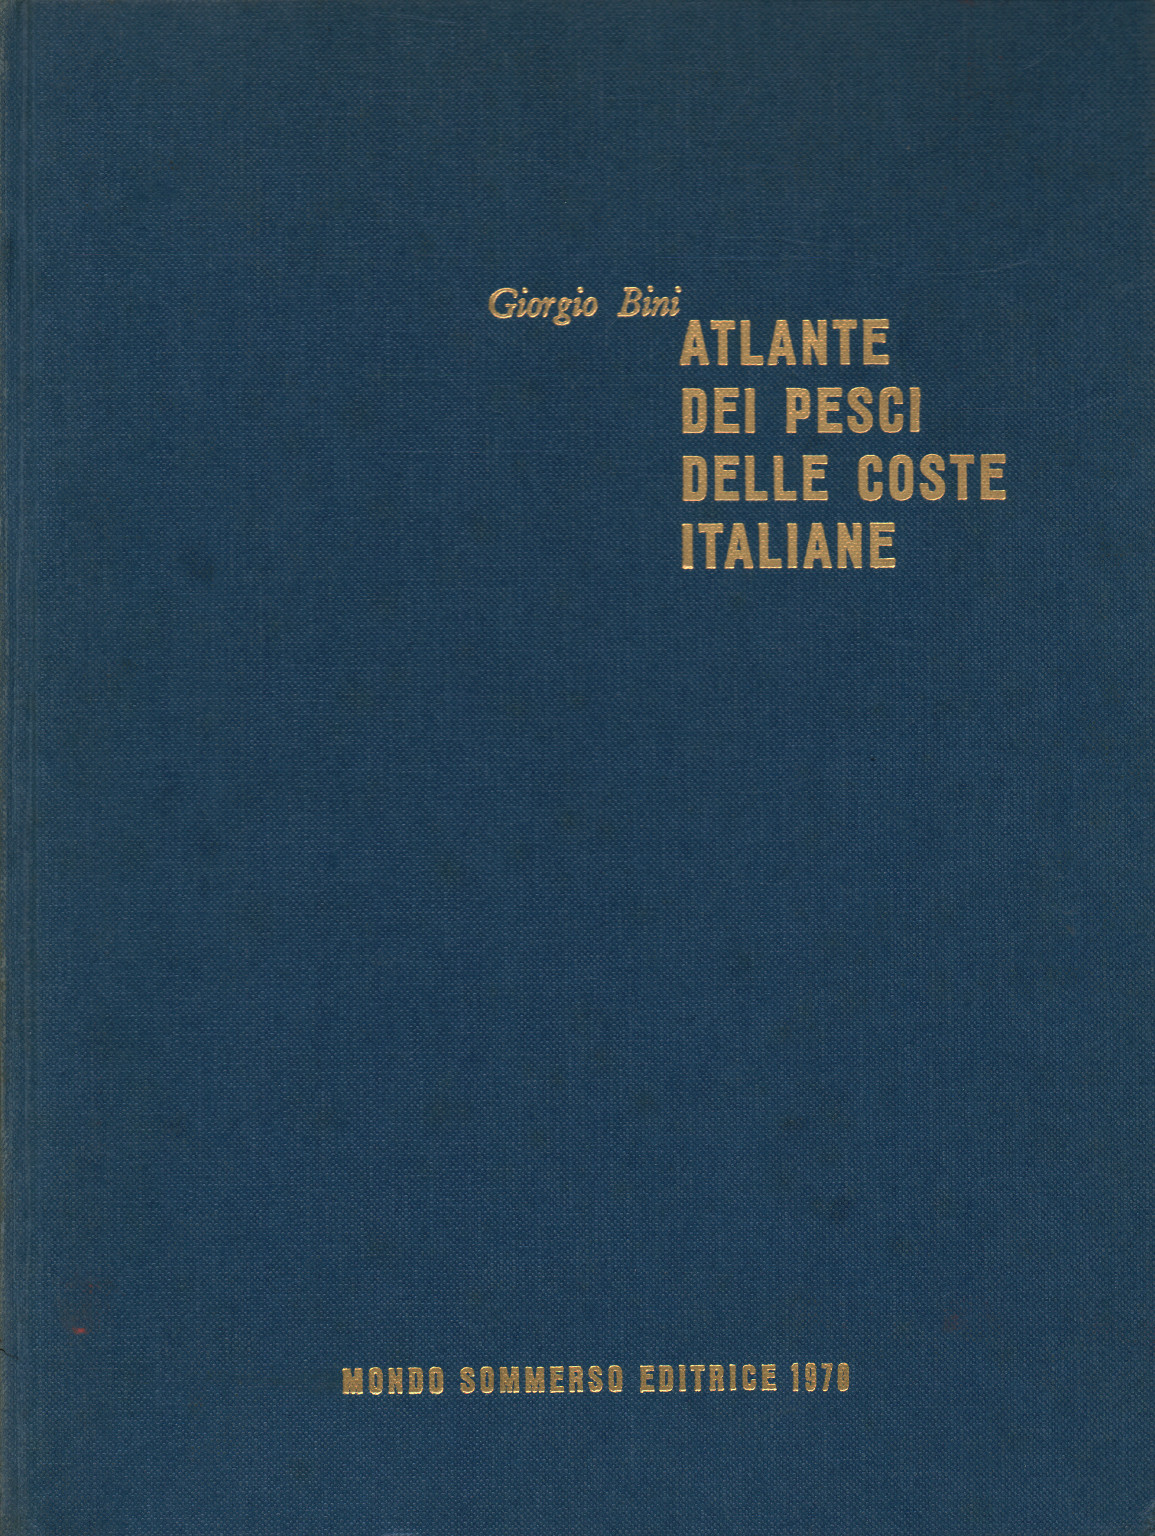 Atlas of fishes of the Italian coasts Volume III, Giorgio Bini